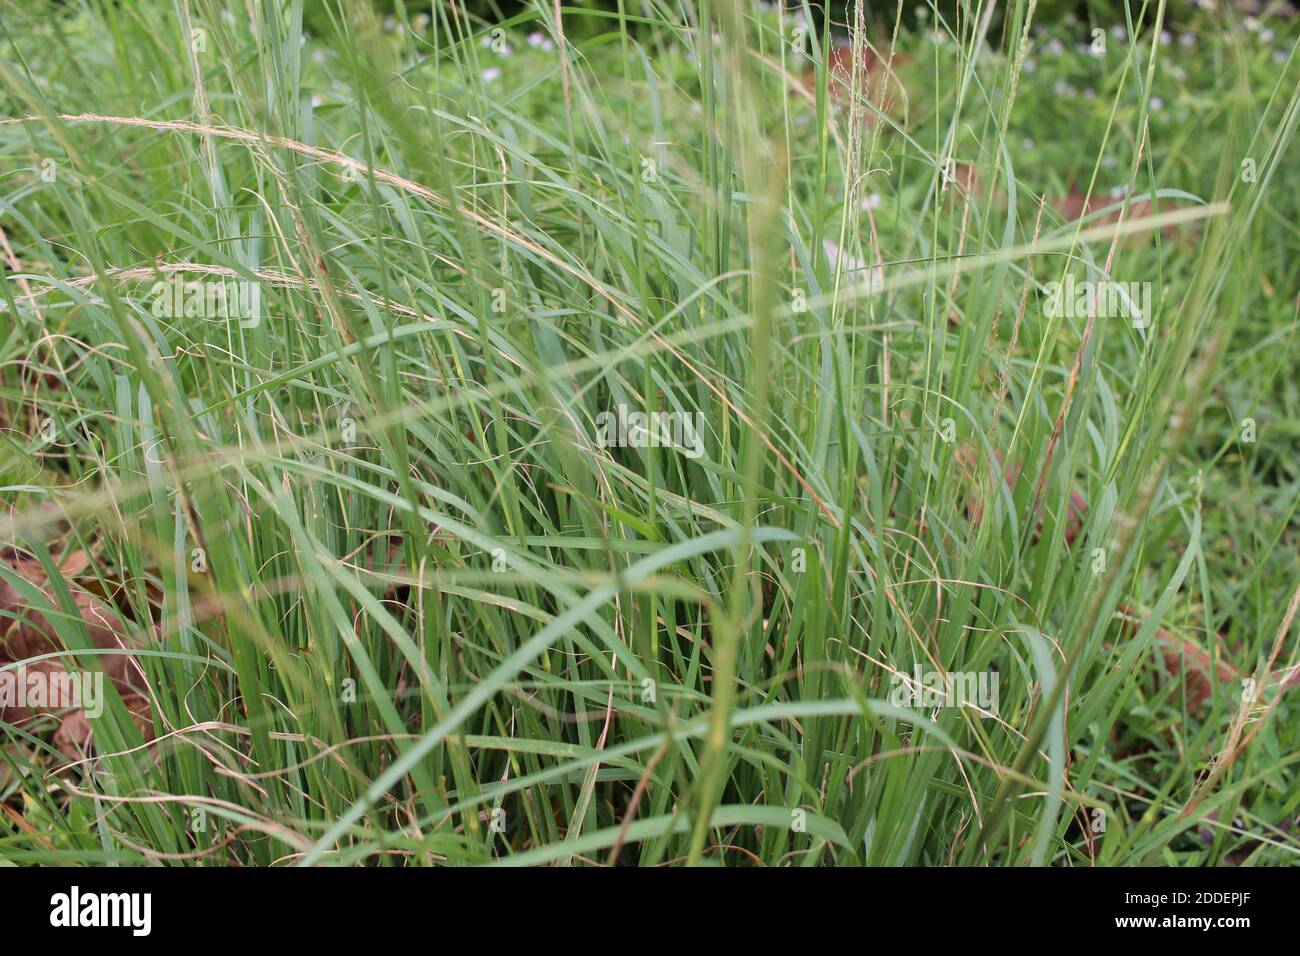 Tall grass close up Stock Photo